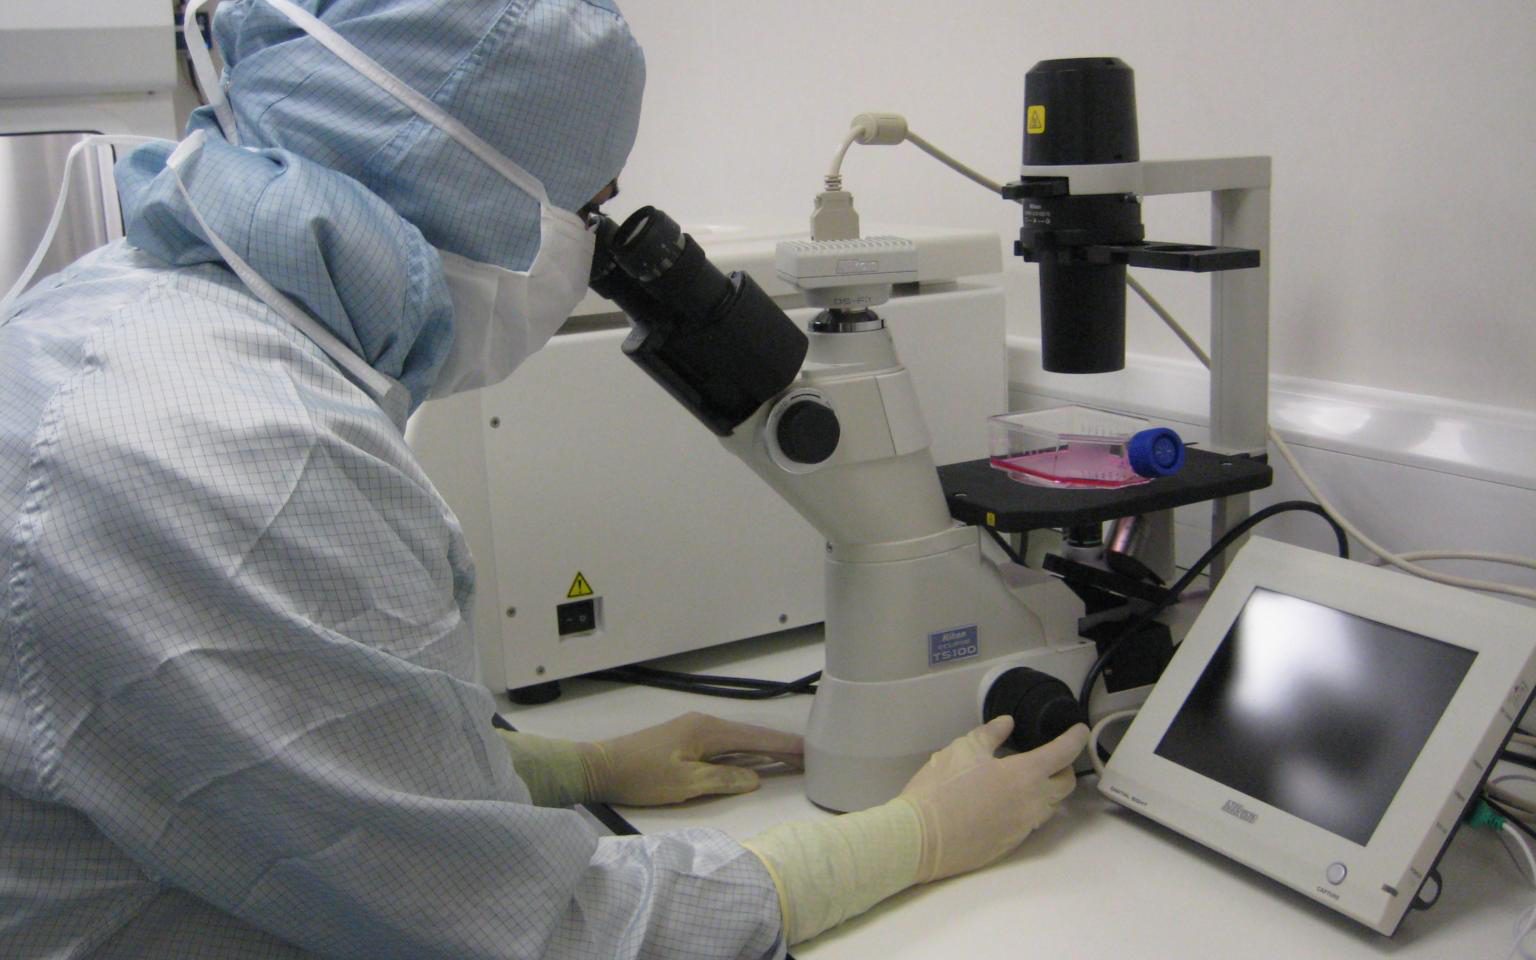 laboratory microscope